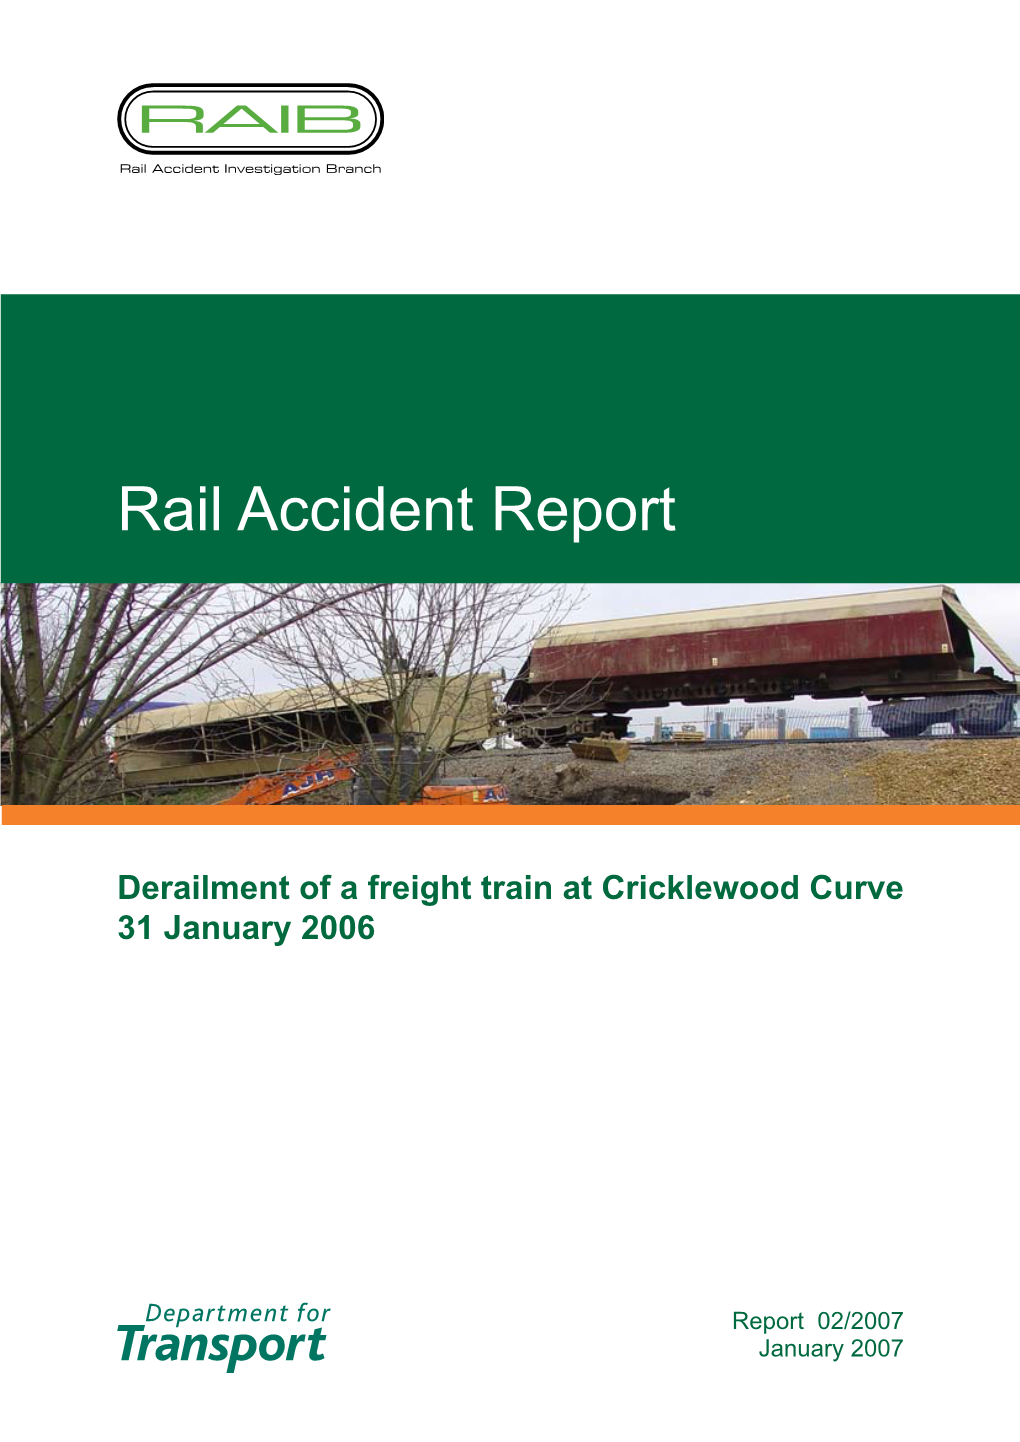 RAIB Report 02/2007